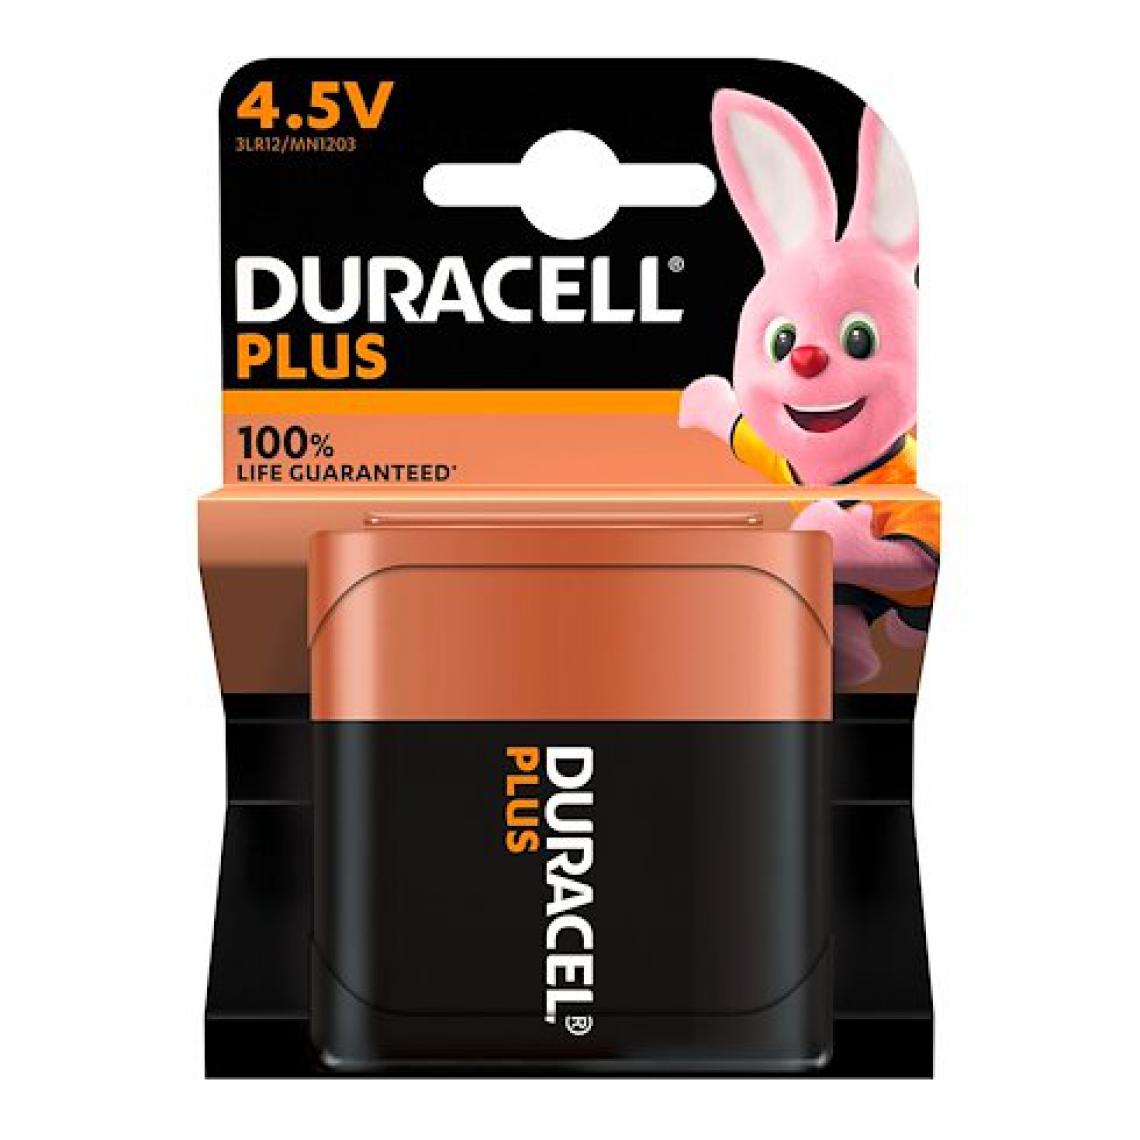 Duracell - Blister 1 pile Duracell - 4,5V LR12 Plus - Piles rechargeables